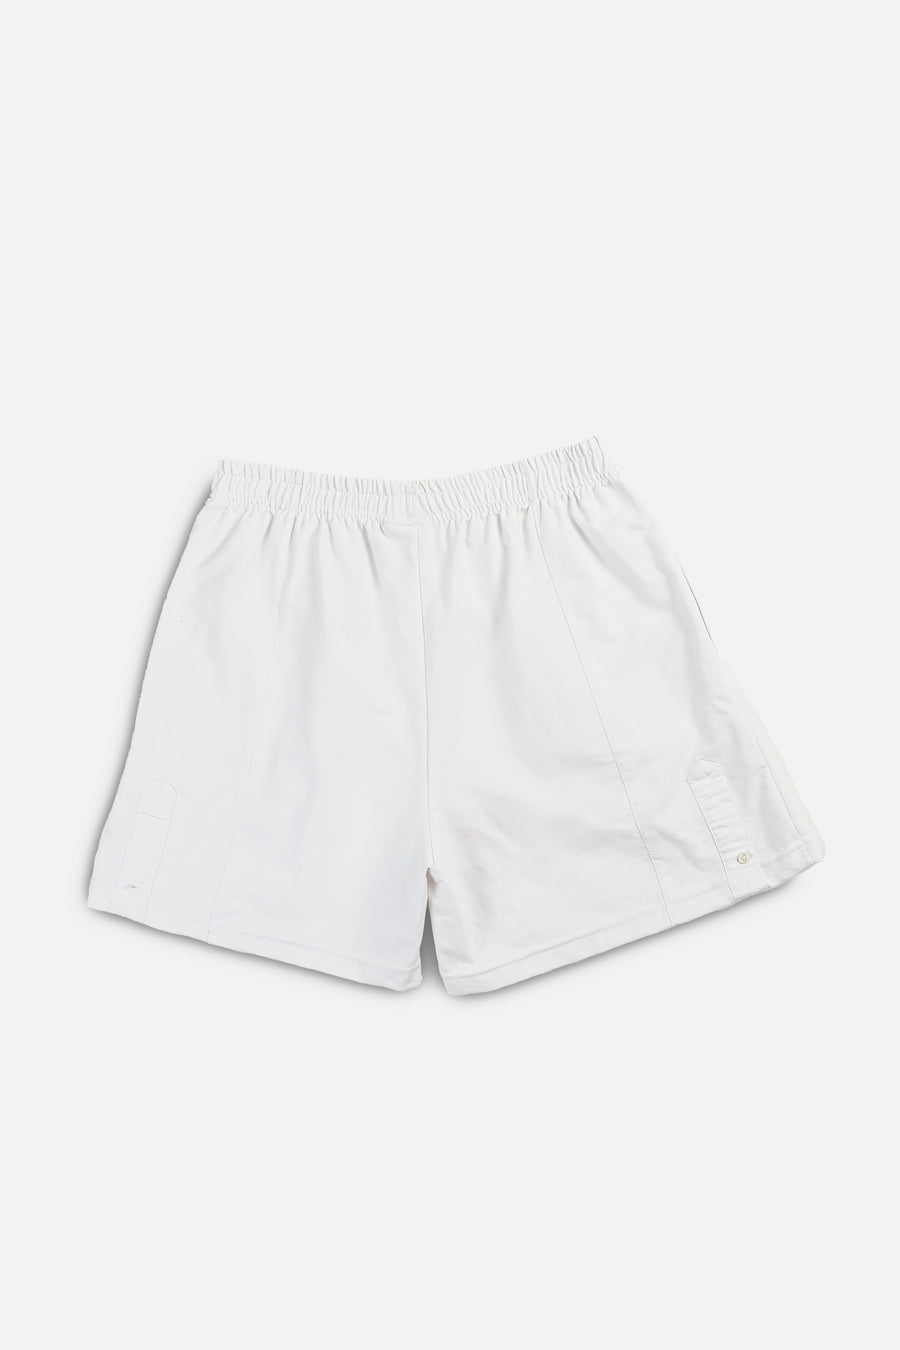 Unisex Rework Oxford Boxer Shorts - XS, S, M, L, XL